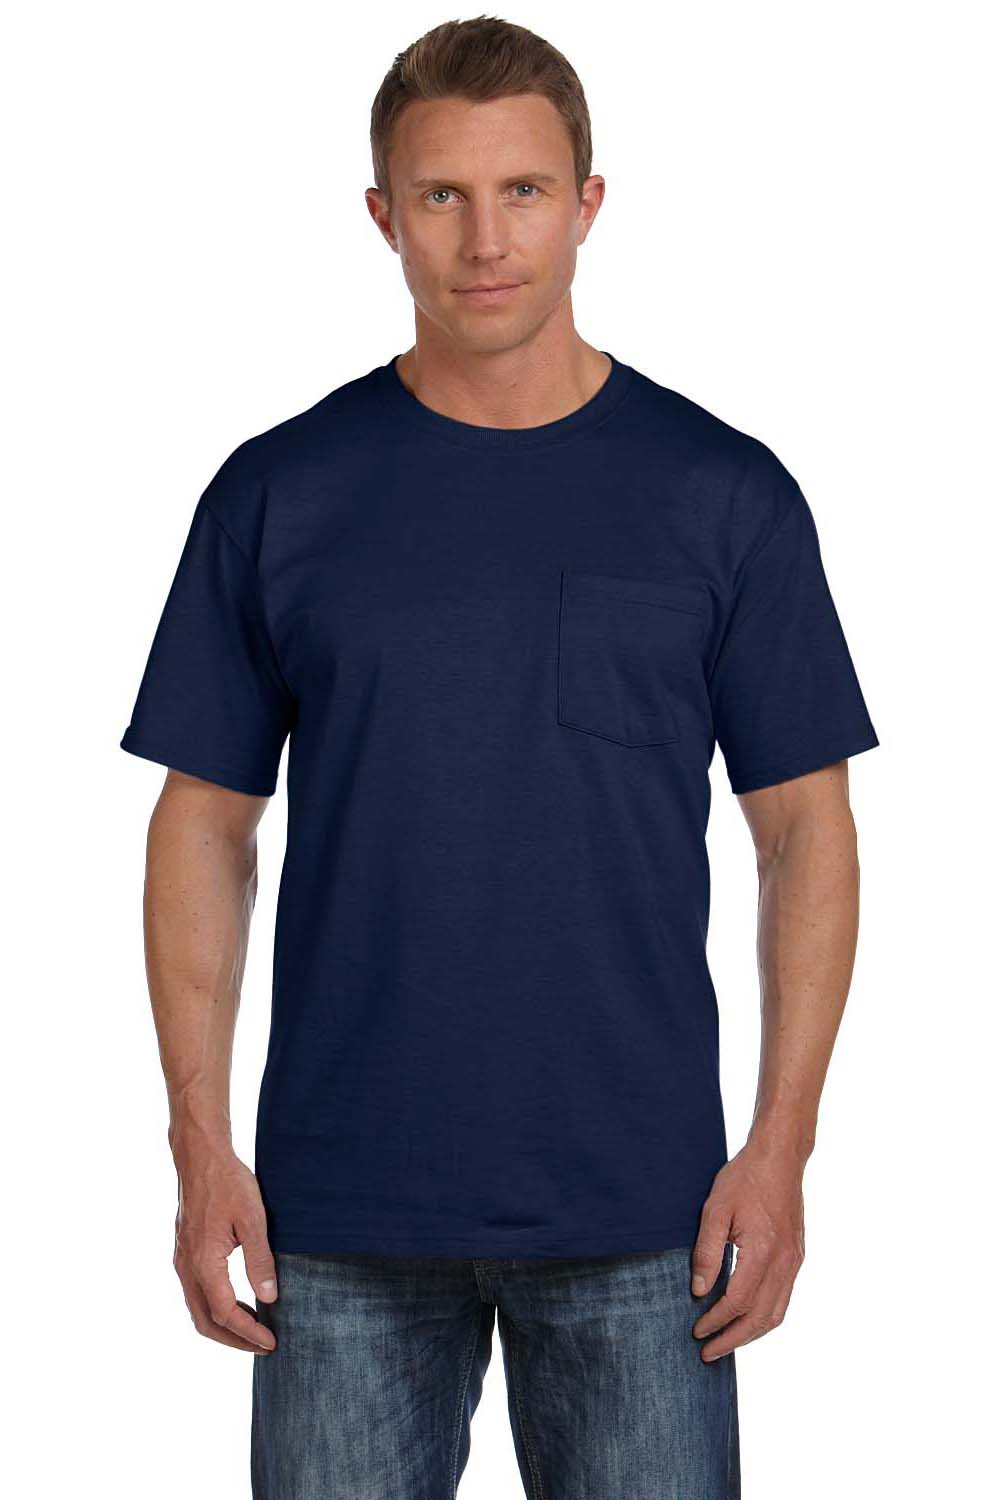 Fruit Of The Loom 3931P Mens HD Jersey Short Sleeve Crewneck T-Shirt w/ Pocket Navy Blue Front